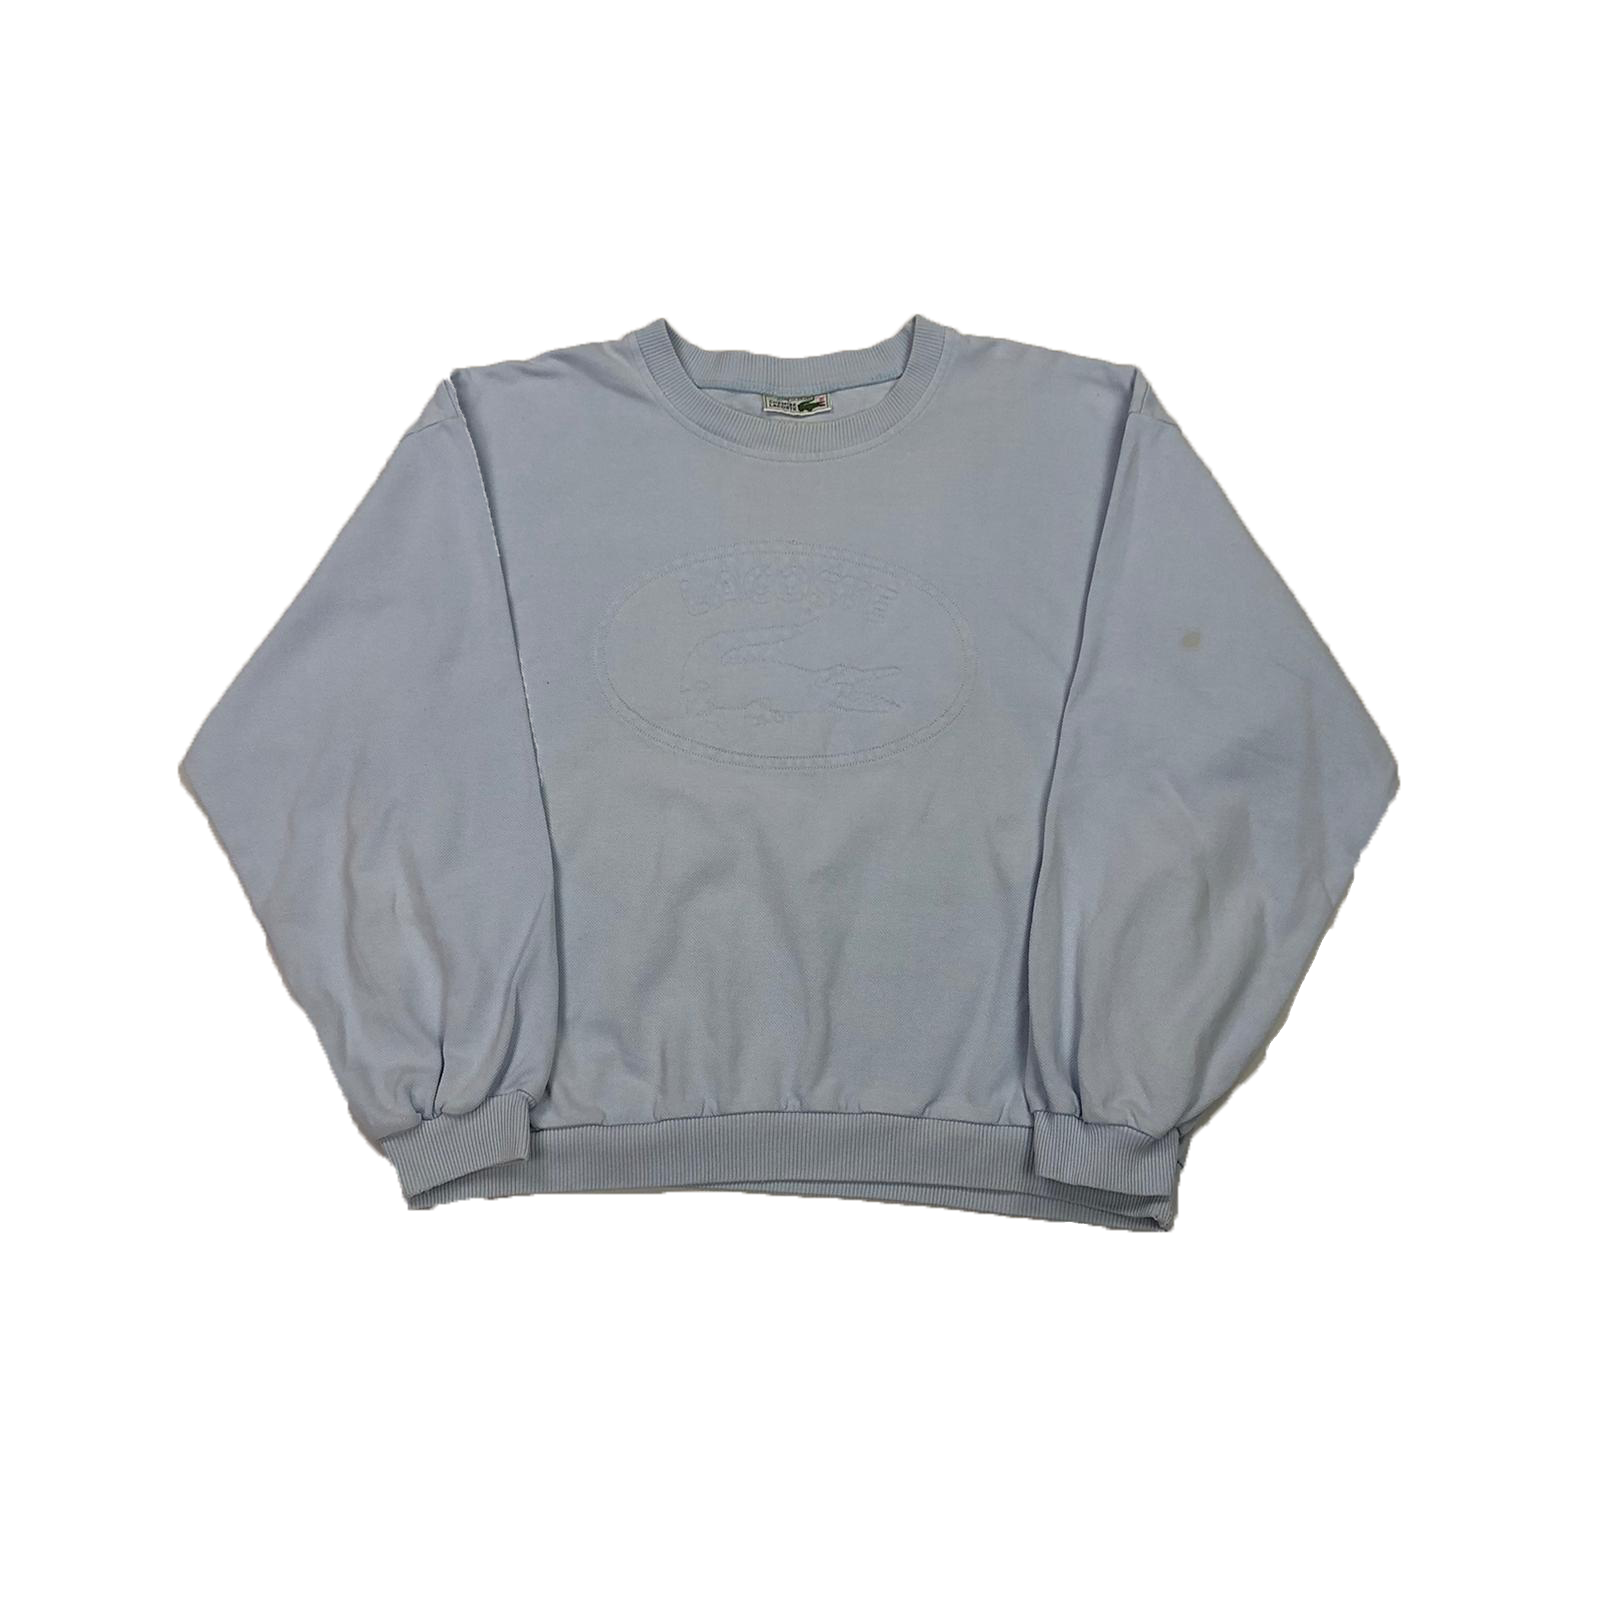 90's Lacoste sweatshirt